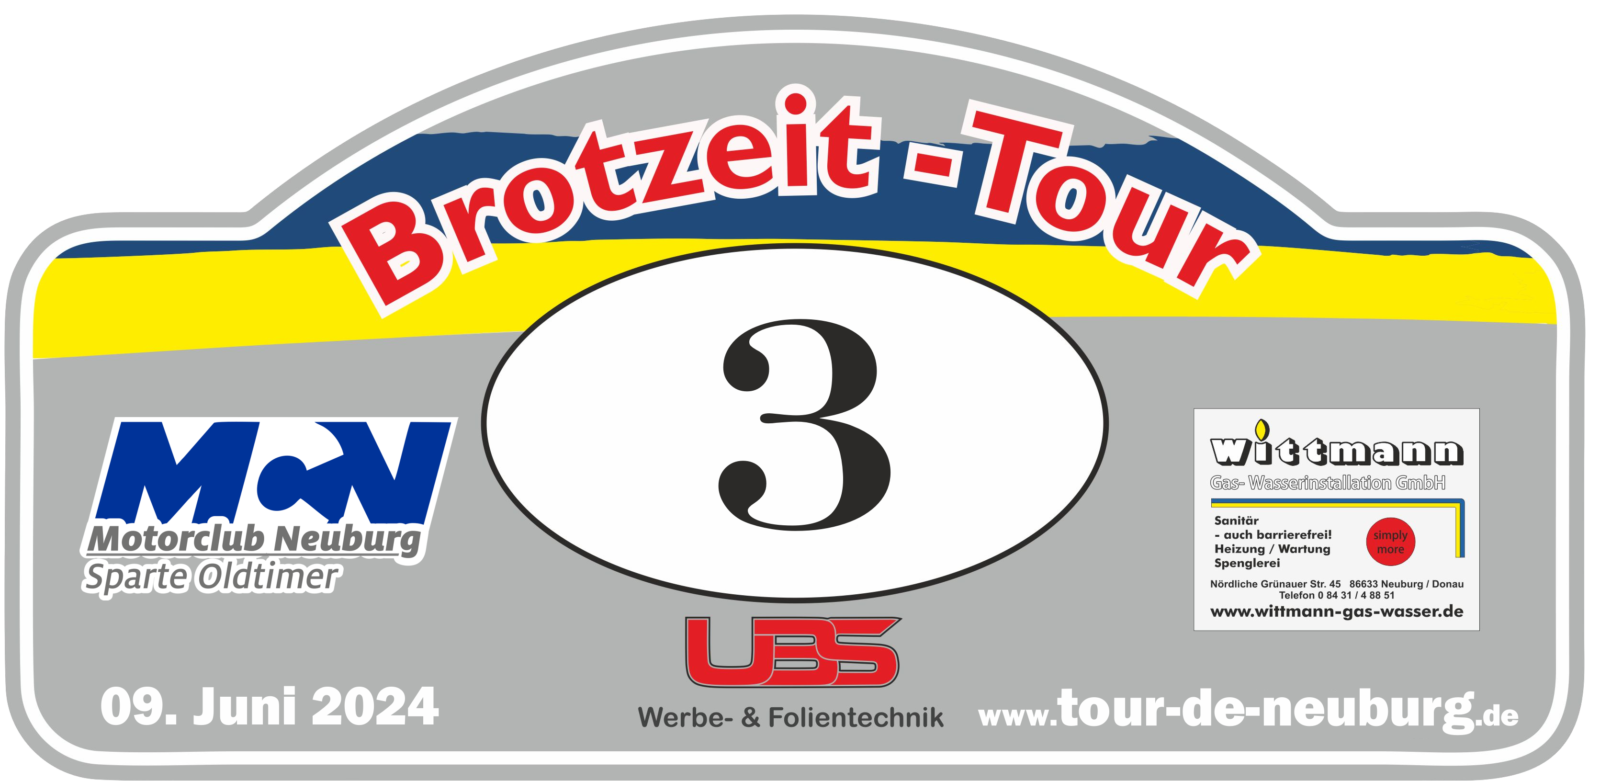 3. Brotzeit-Tour